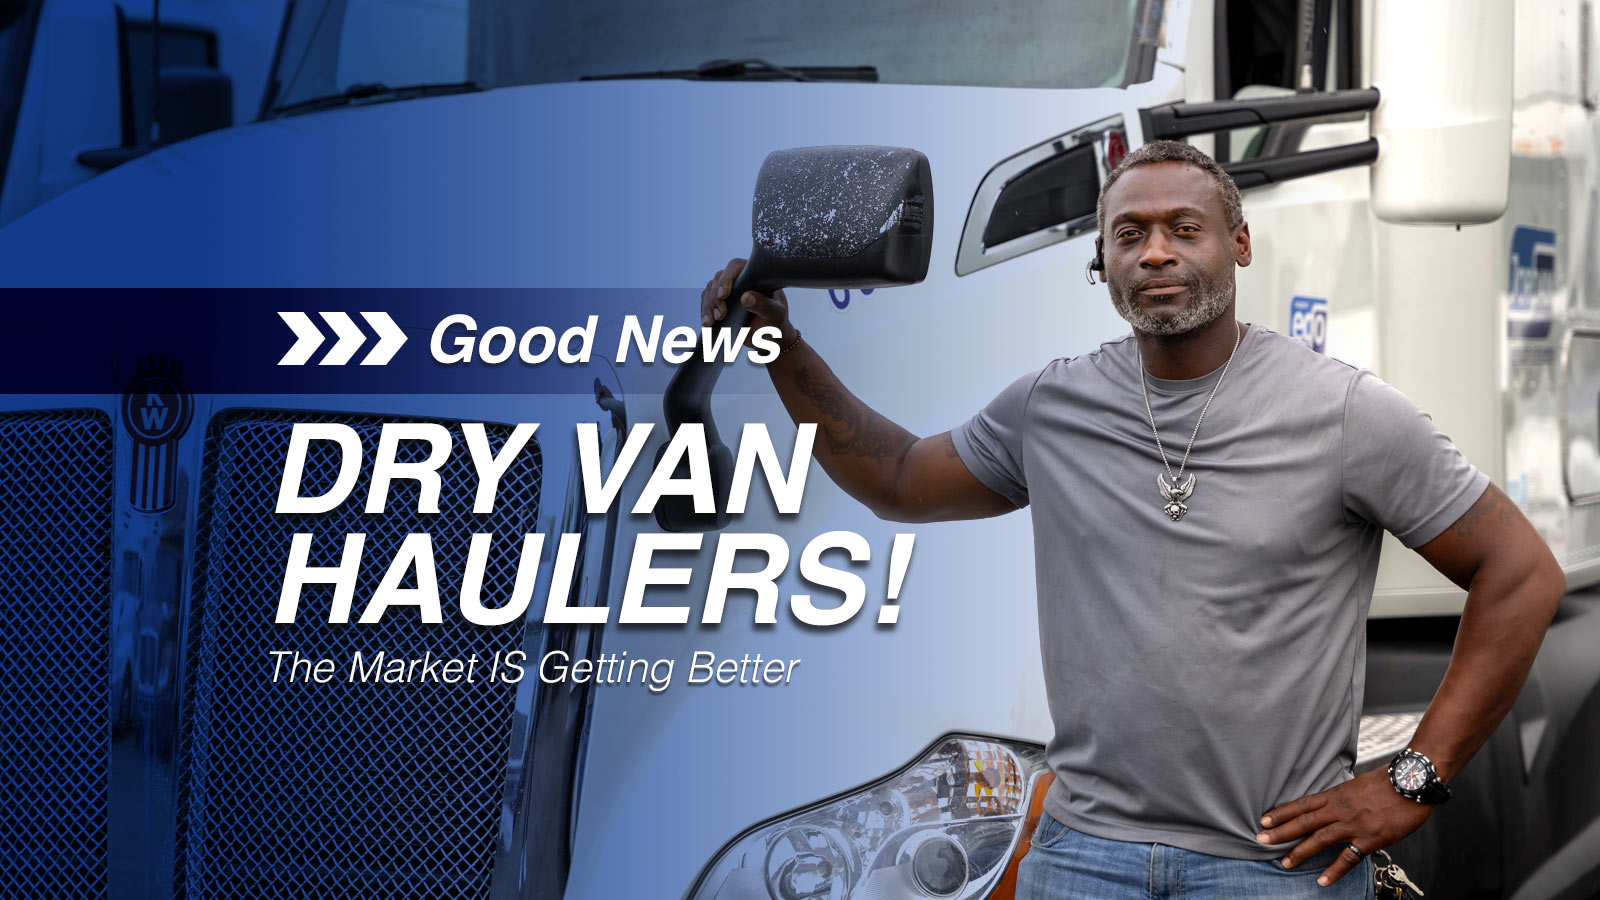 Good News Dry Van Haulers! The Market IS Getting Better